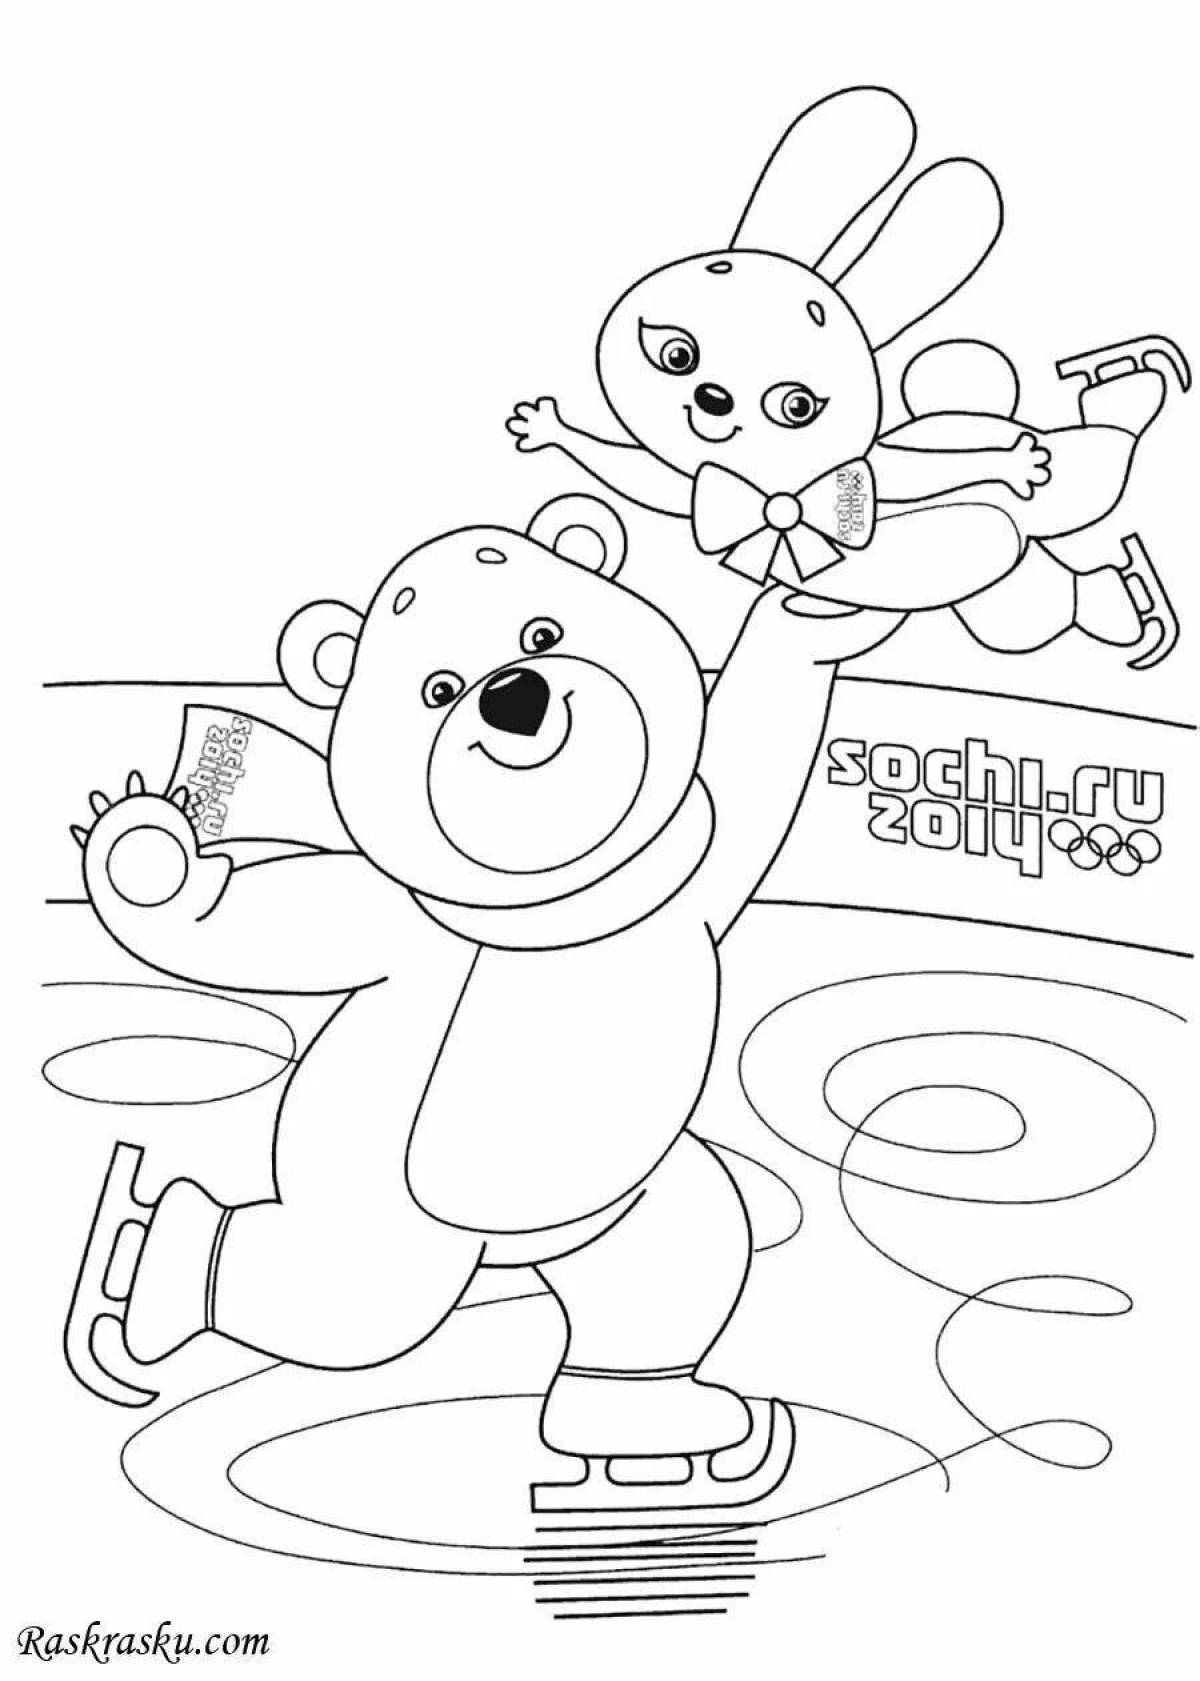 Cute bear and rabbit coloring book